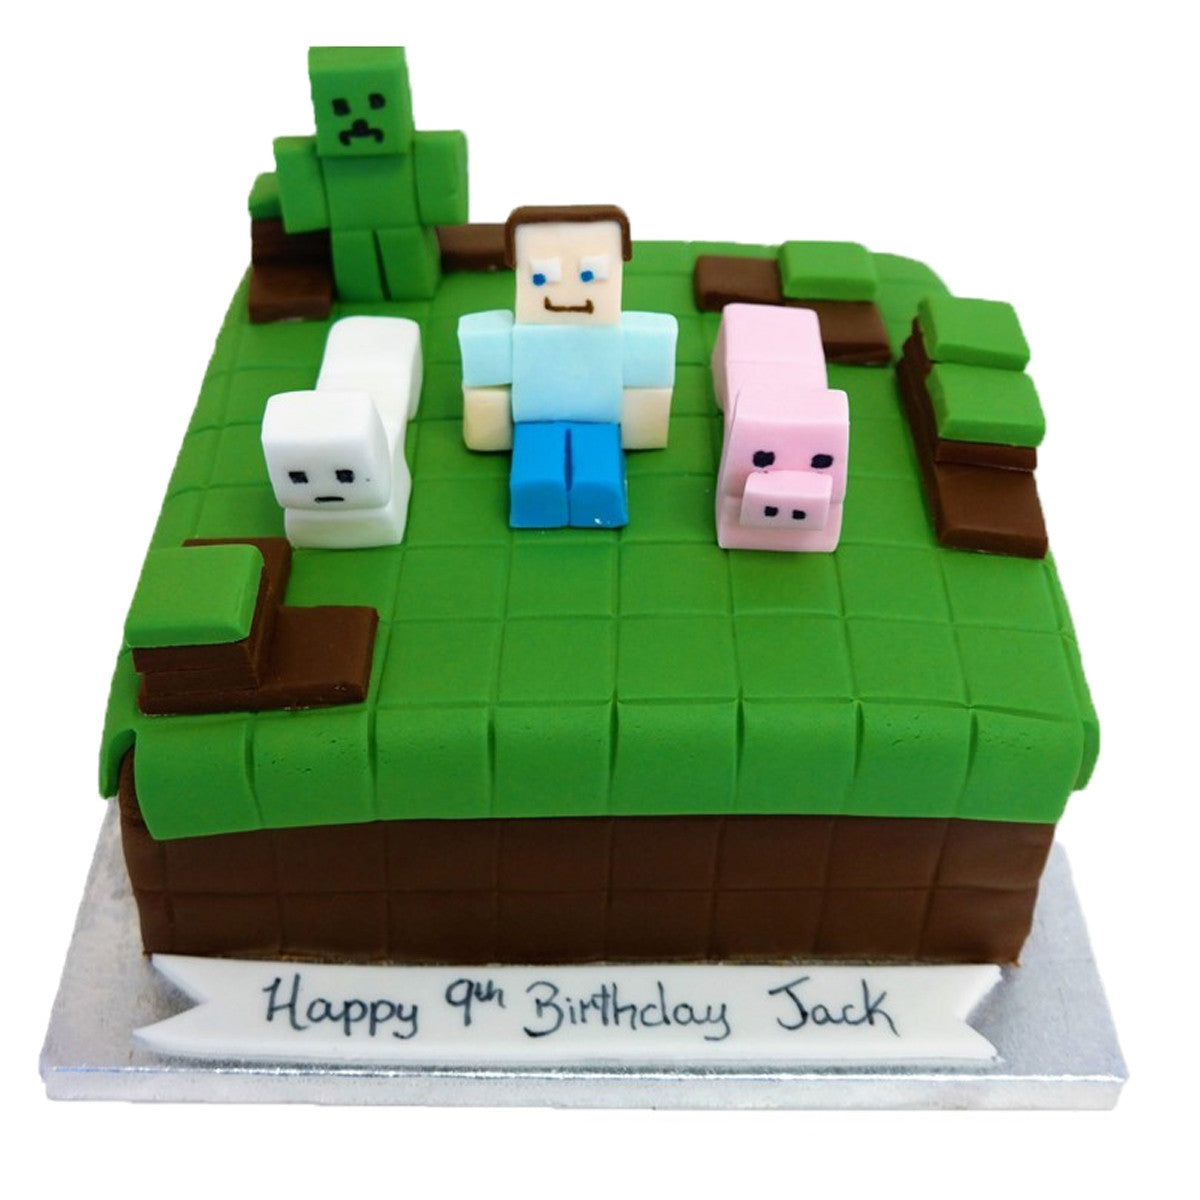 A simple triple layer minecraft themed cake #minecraft #cake #vanilla  #chocolate #birthday #celebration #cakesofinstagram… | Instagram